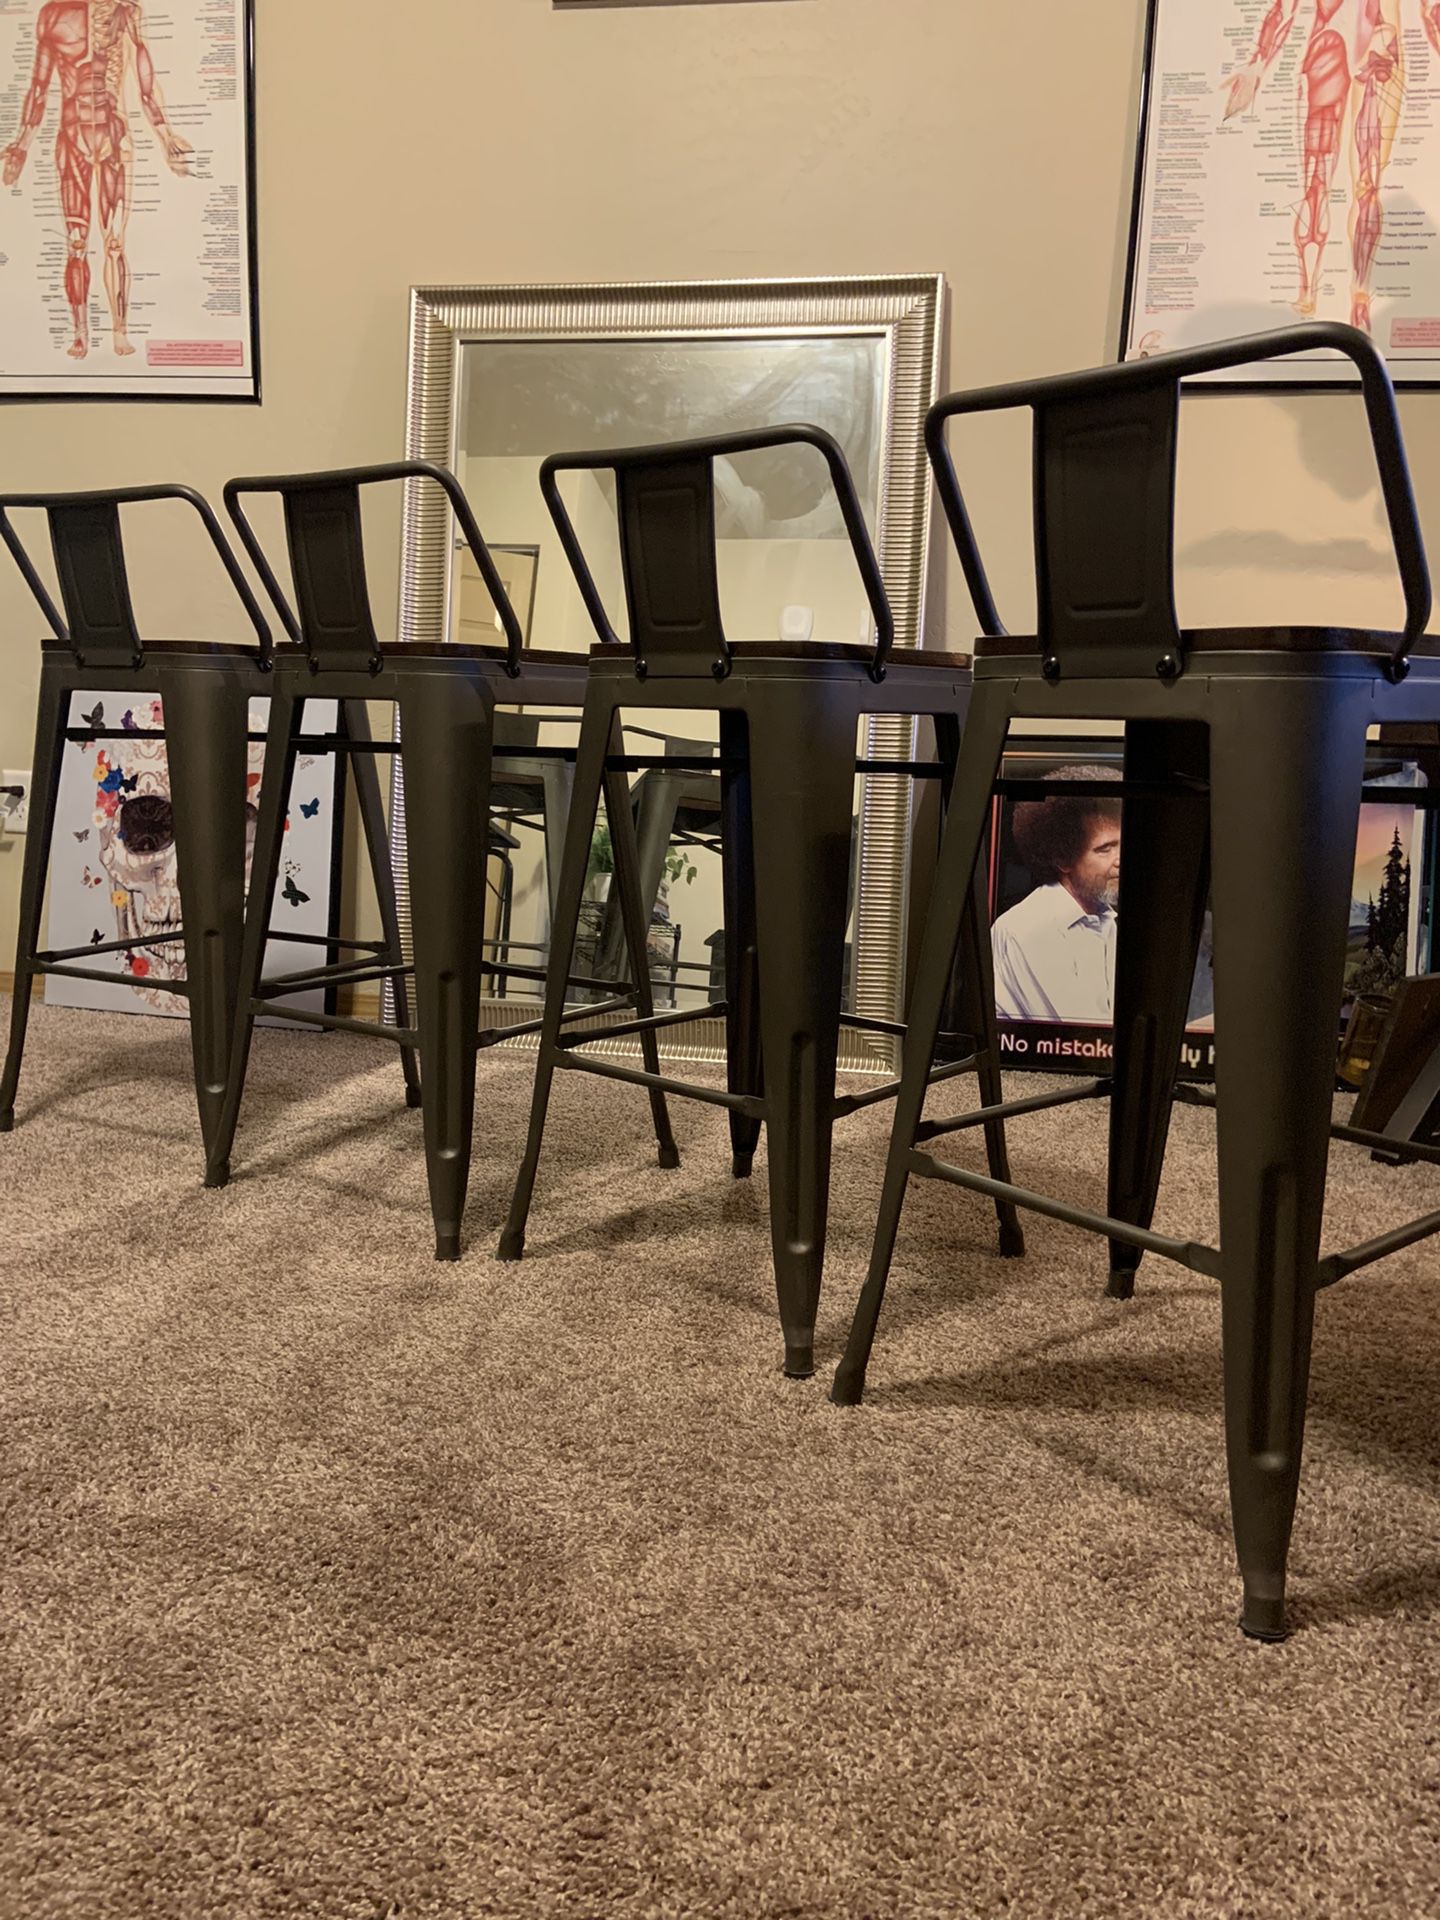 Barstool Chairs 